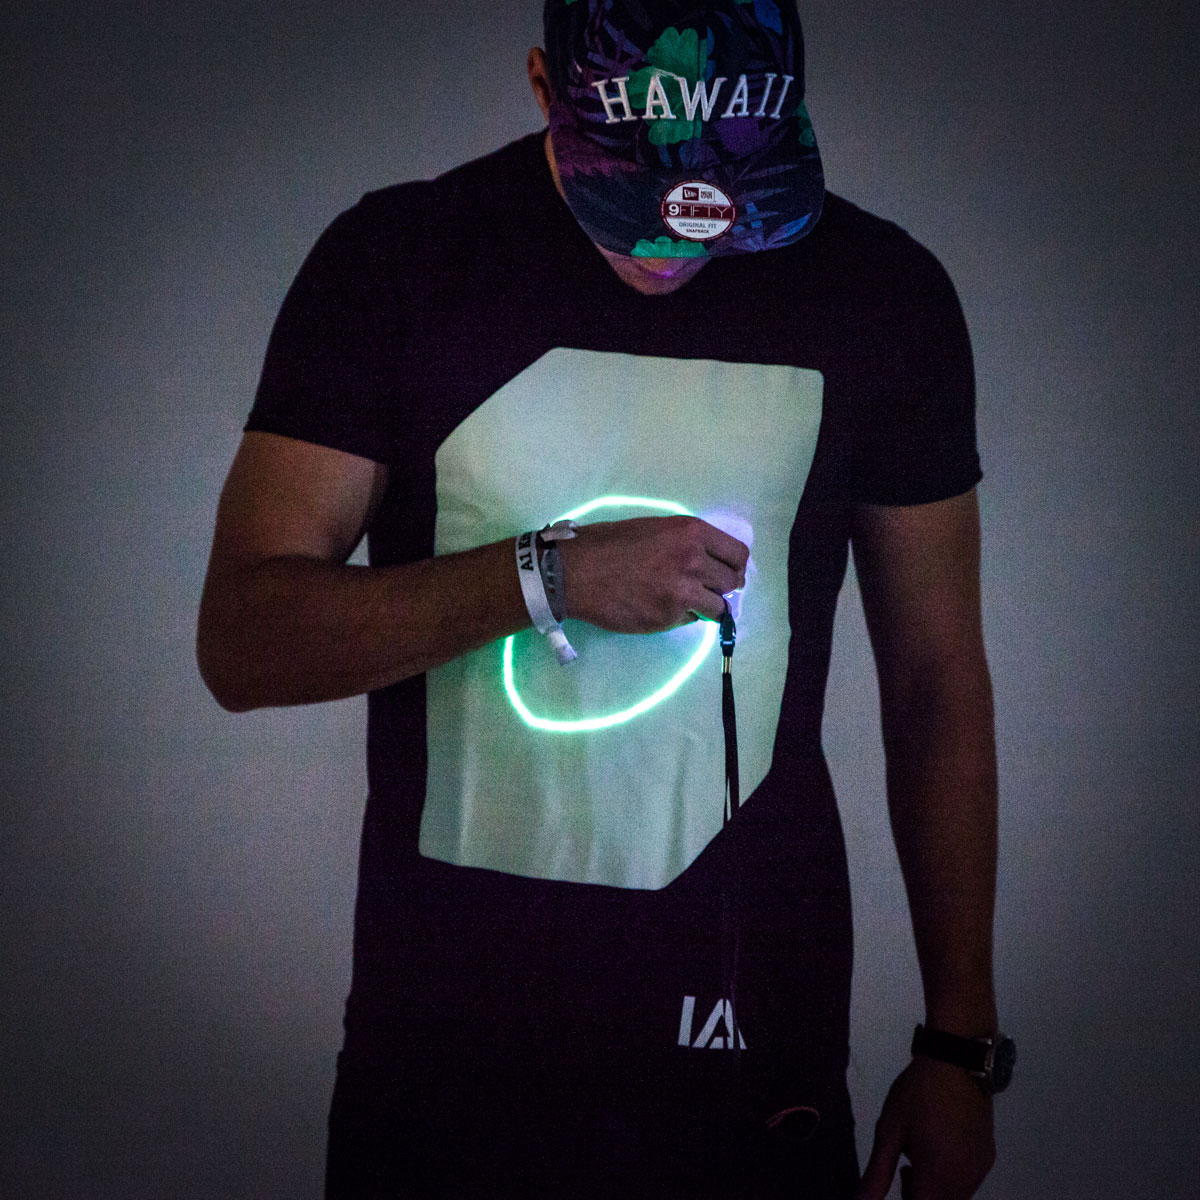 Interactief Glow T-shirt